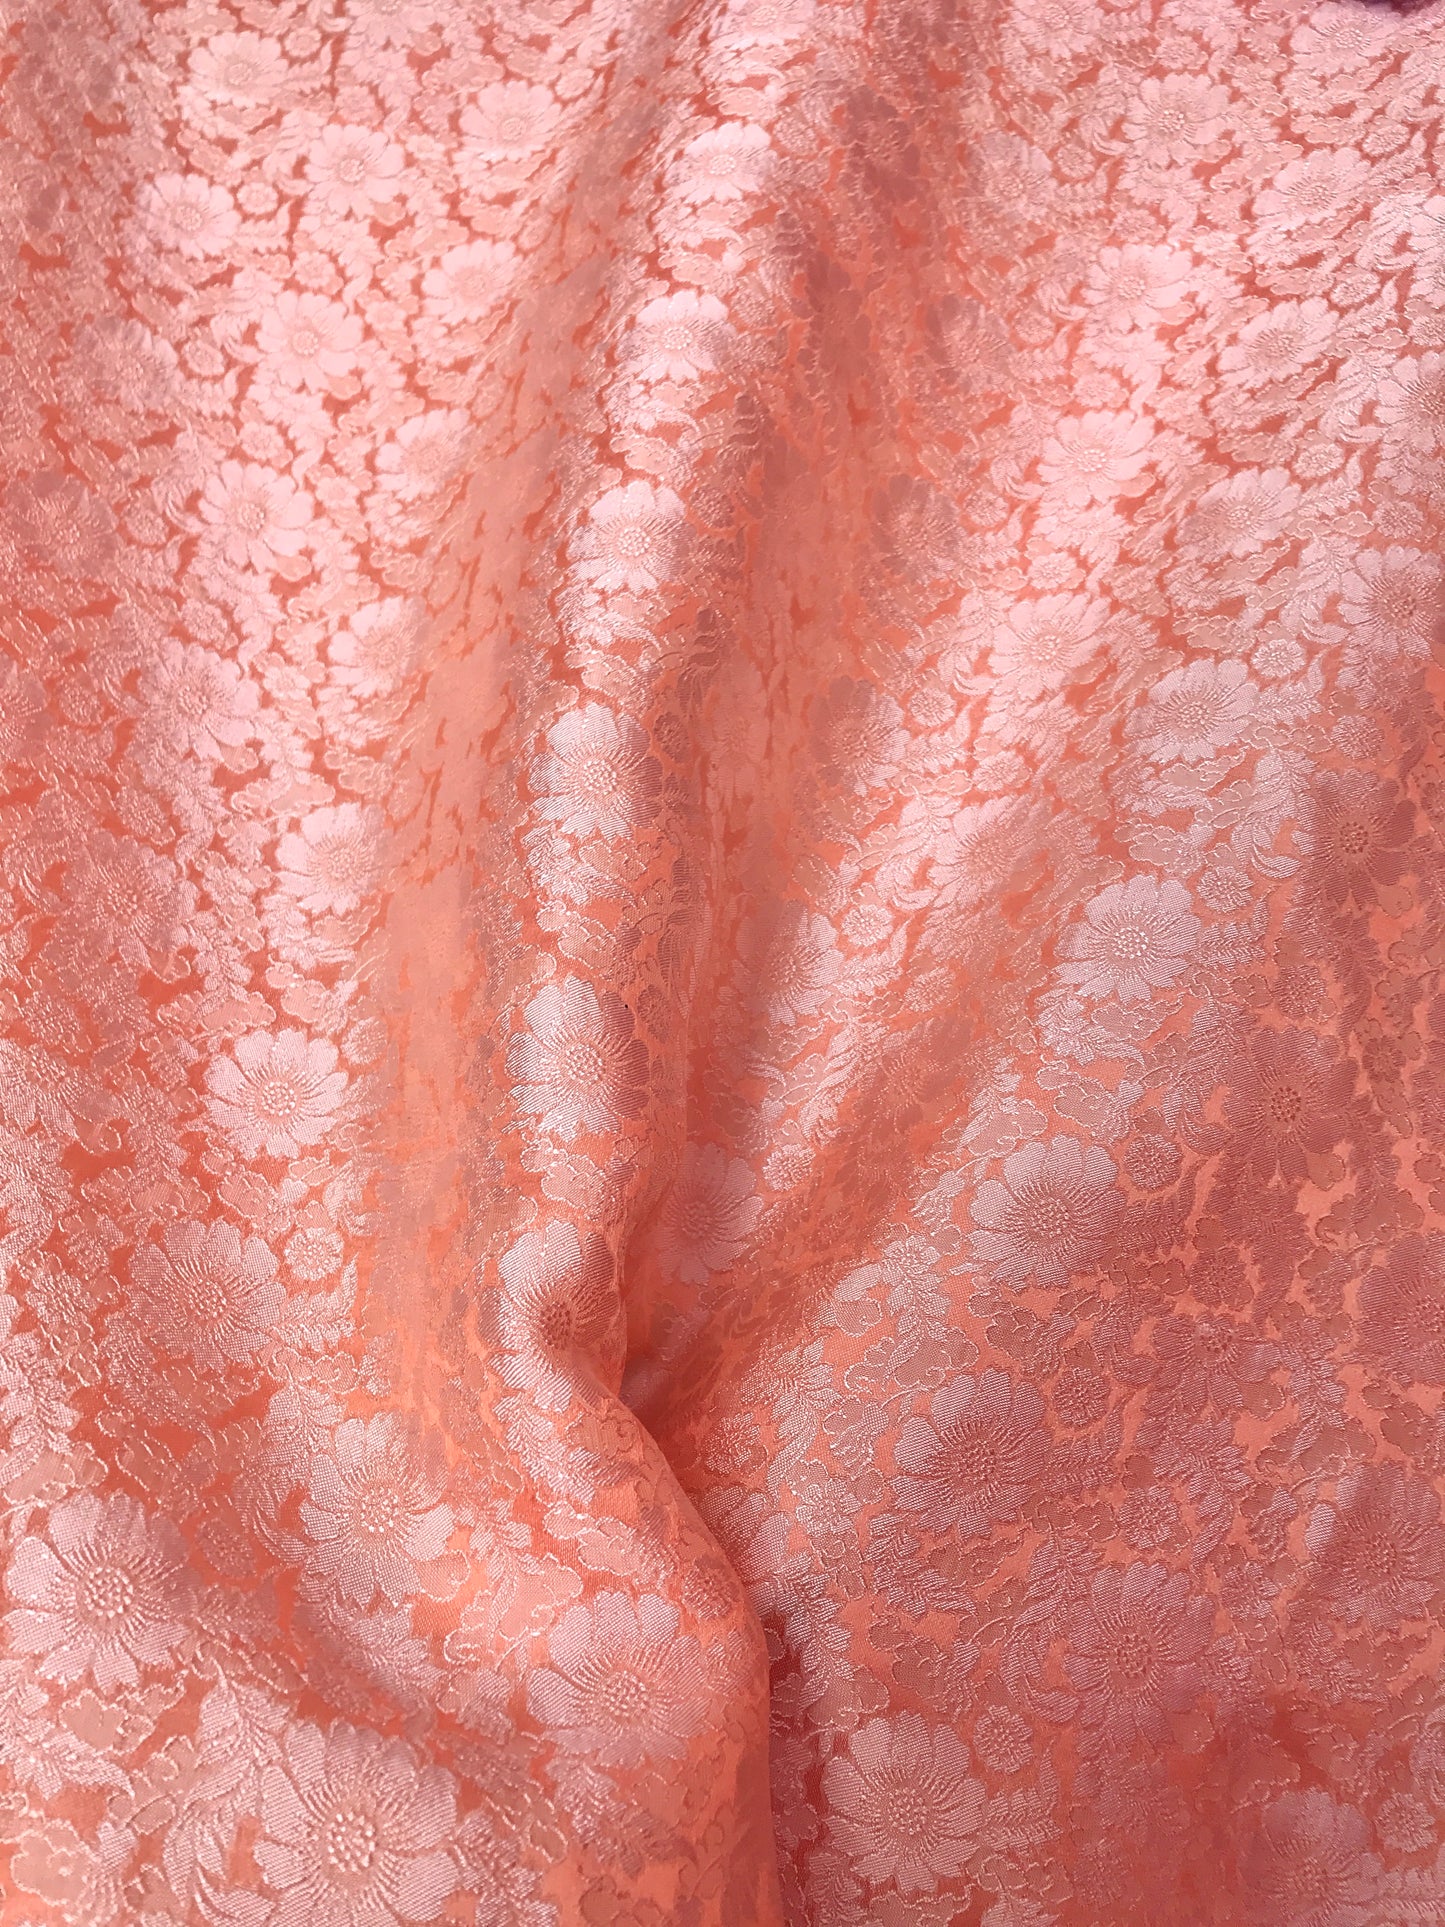 Melon Orange silk with Daisy chrysanthemums - PURE MULBERRY SILK fabric by the yard -  Floral Silk -Luxury Silk - Natural silk - Handmade in VietNam